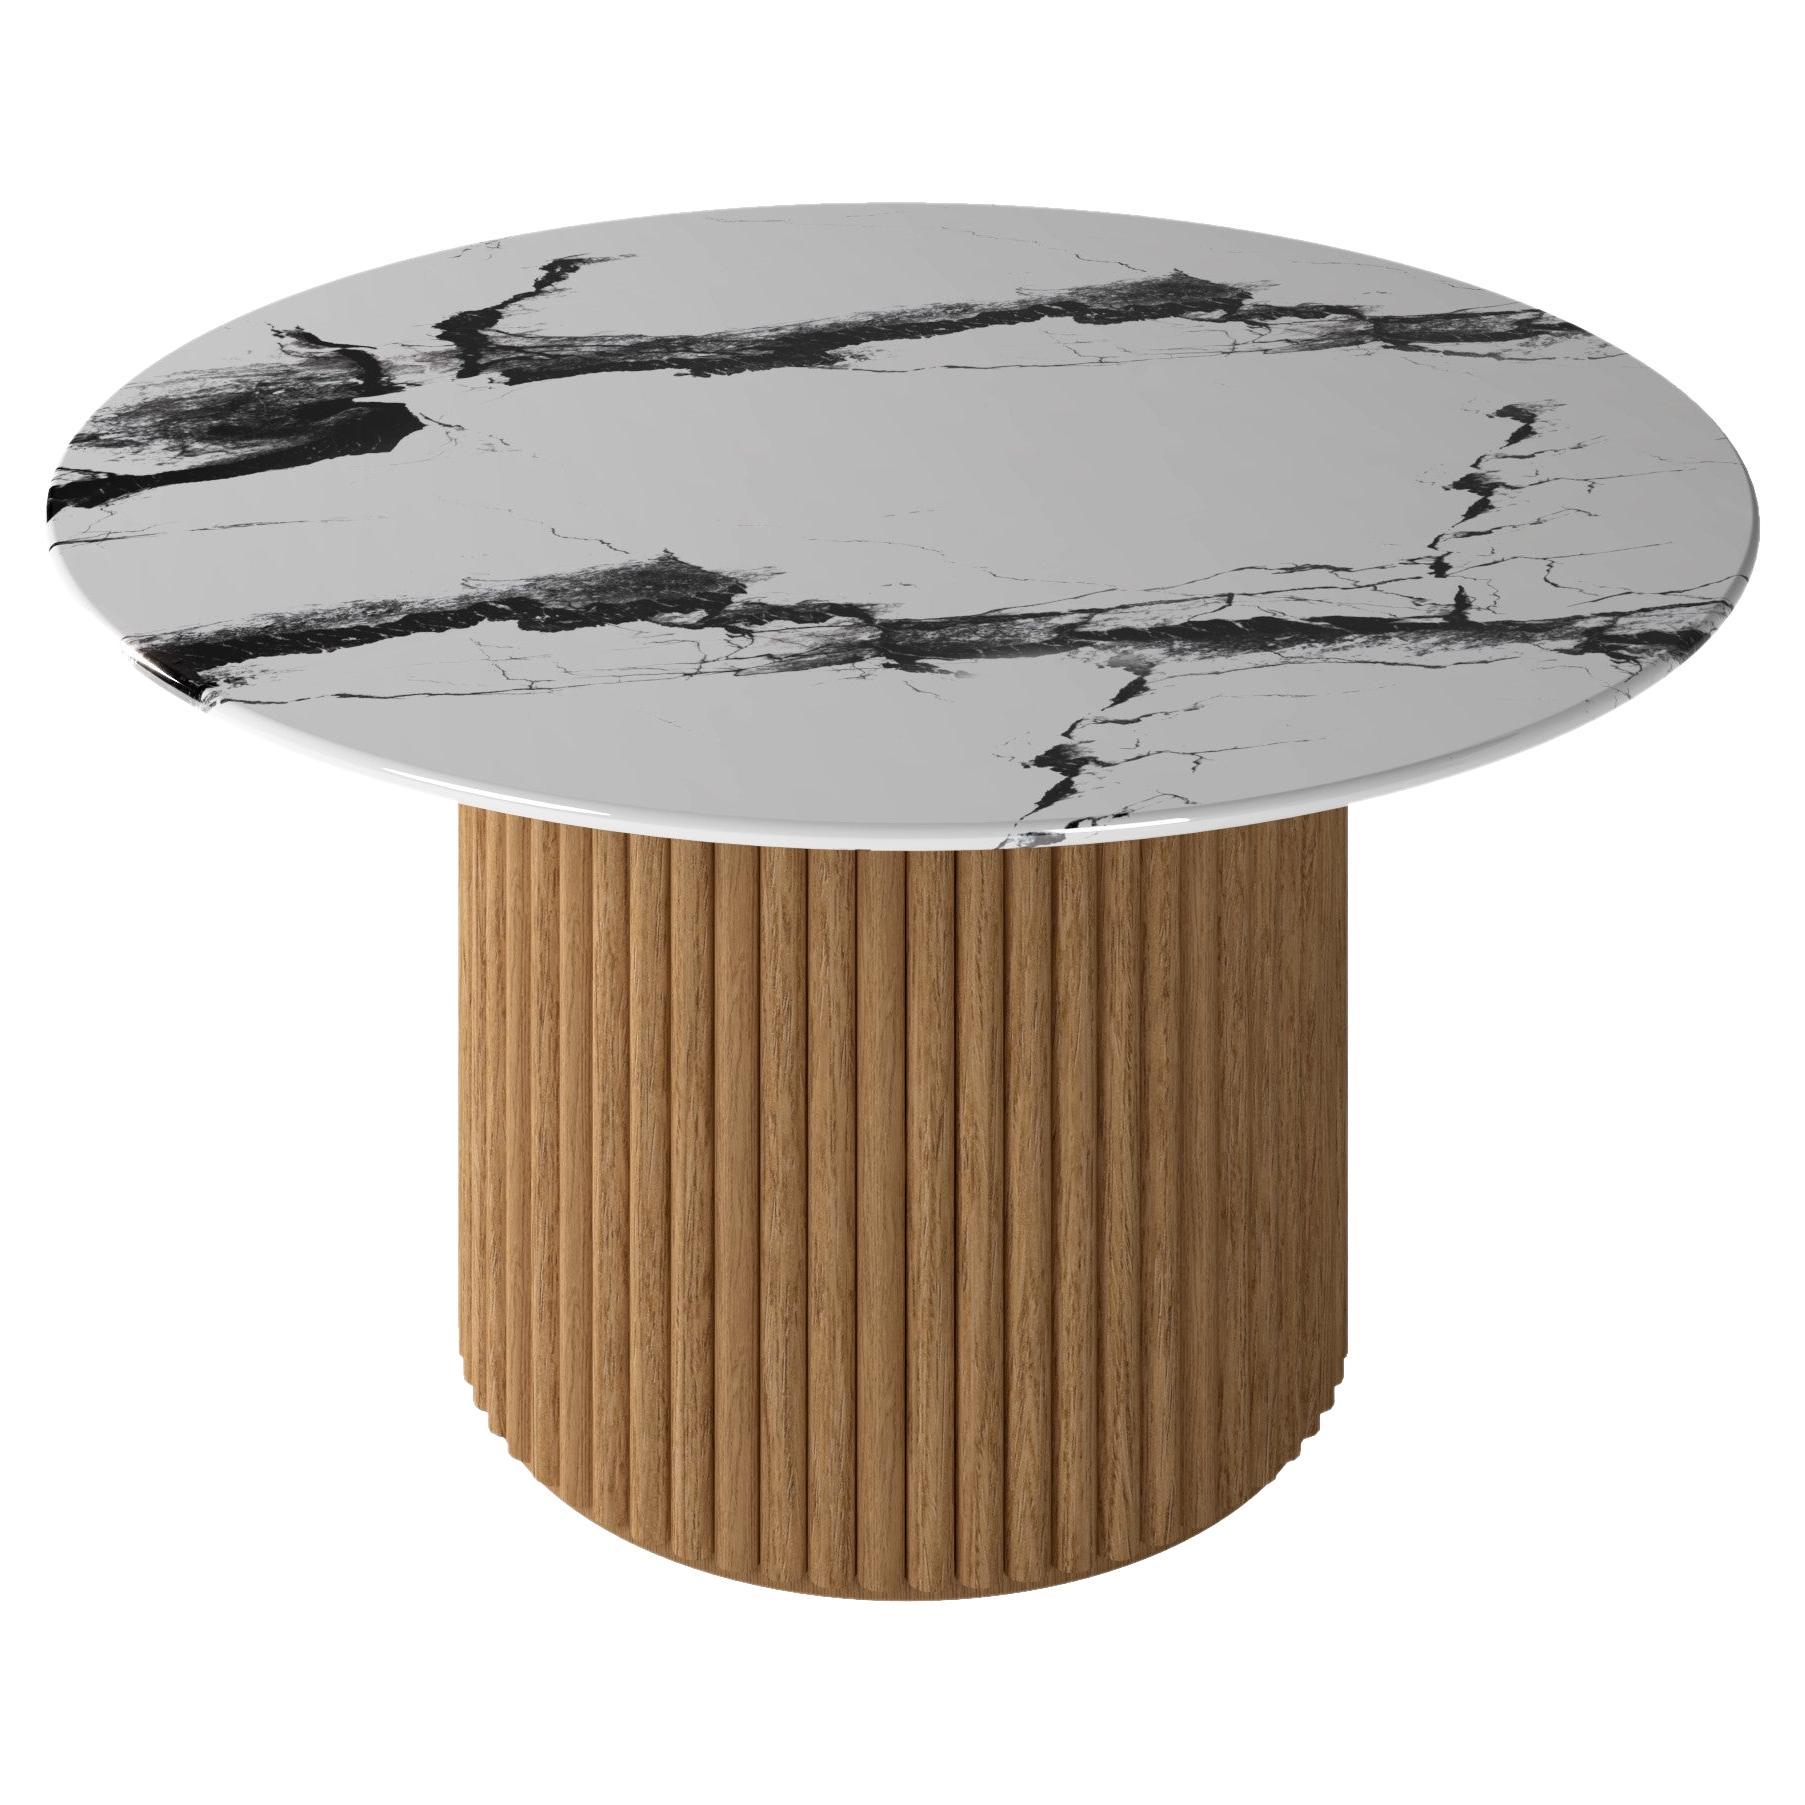 NORDST Mette Dining Table, Italian White Mountain Marble, Danish Modern Design For Sale